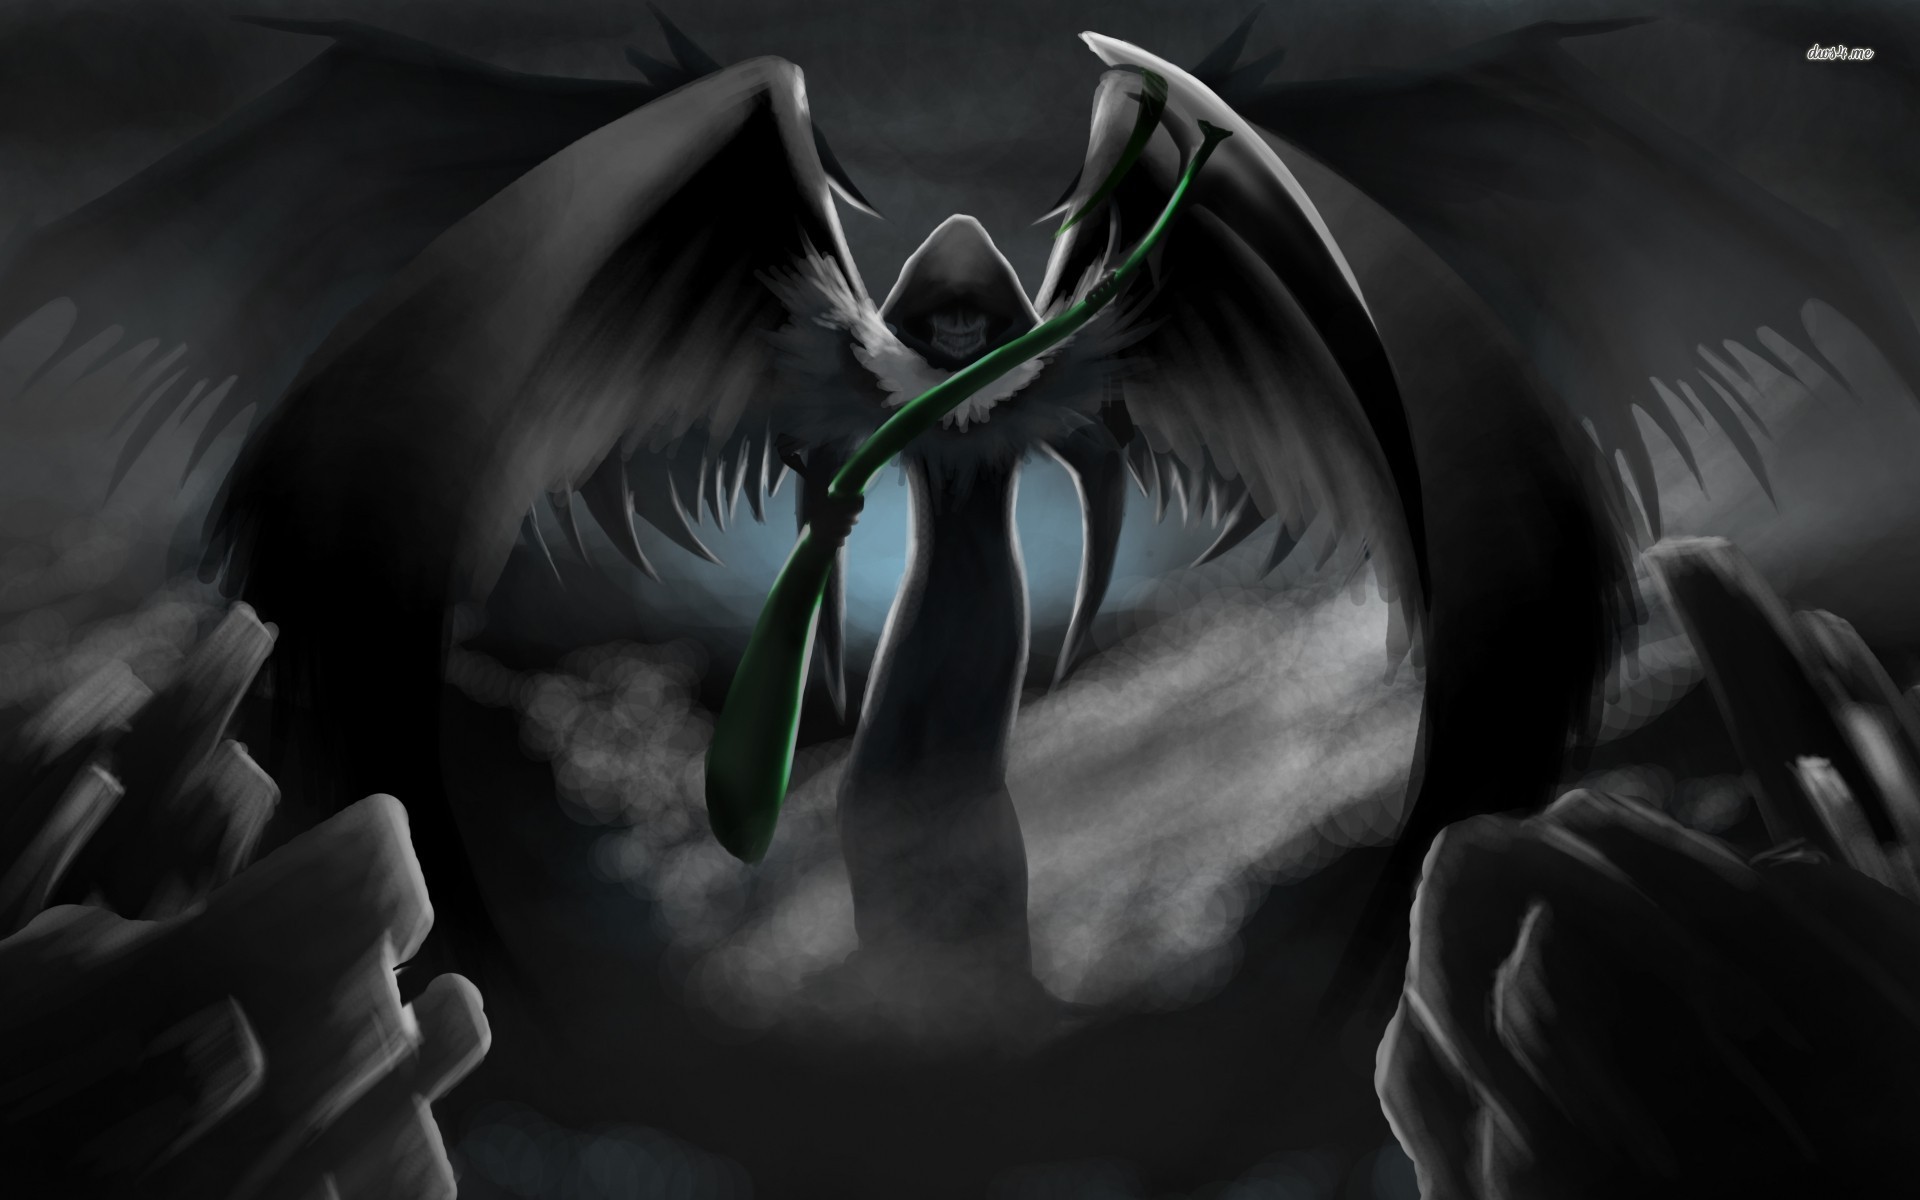 Grim Reaper Wallpaper HD